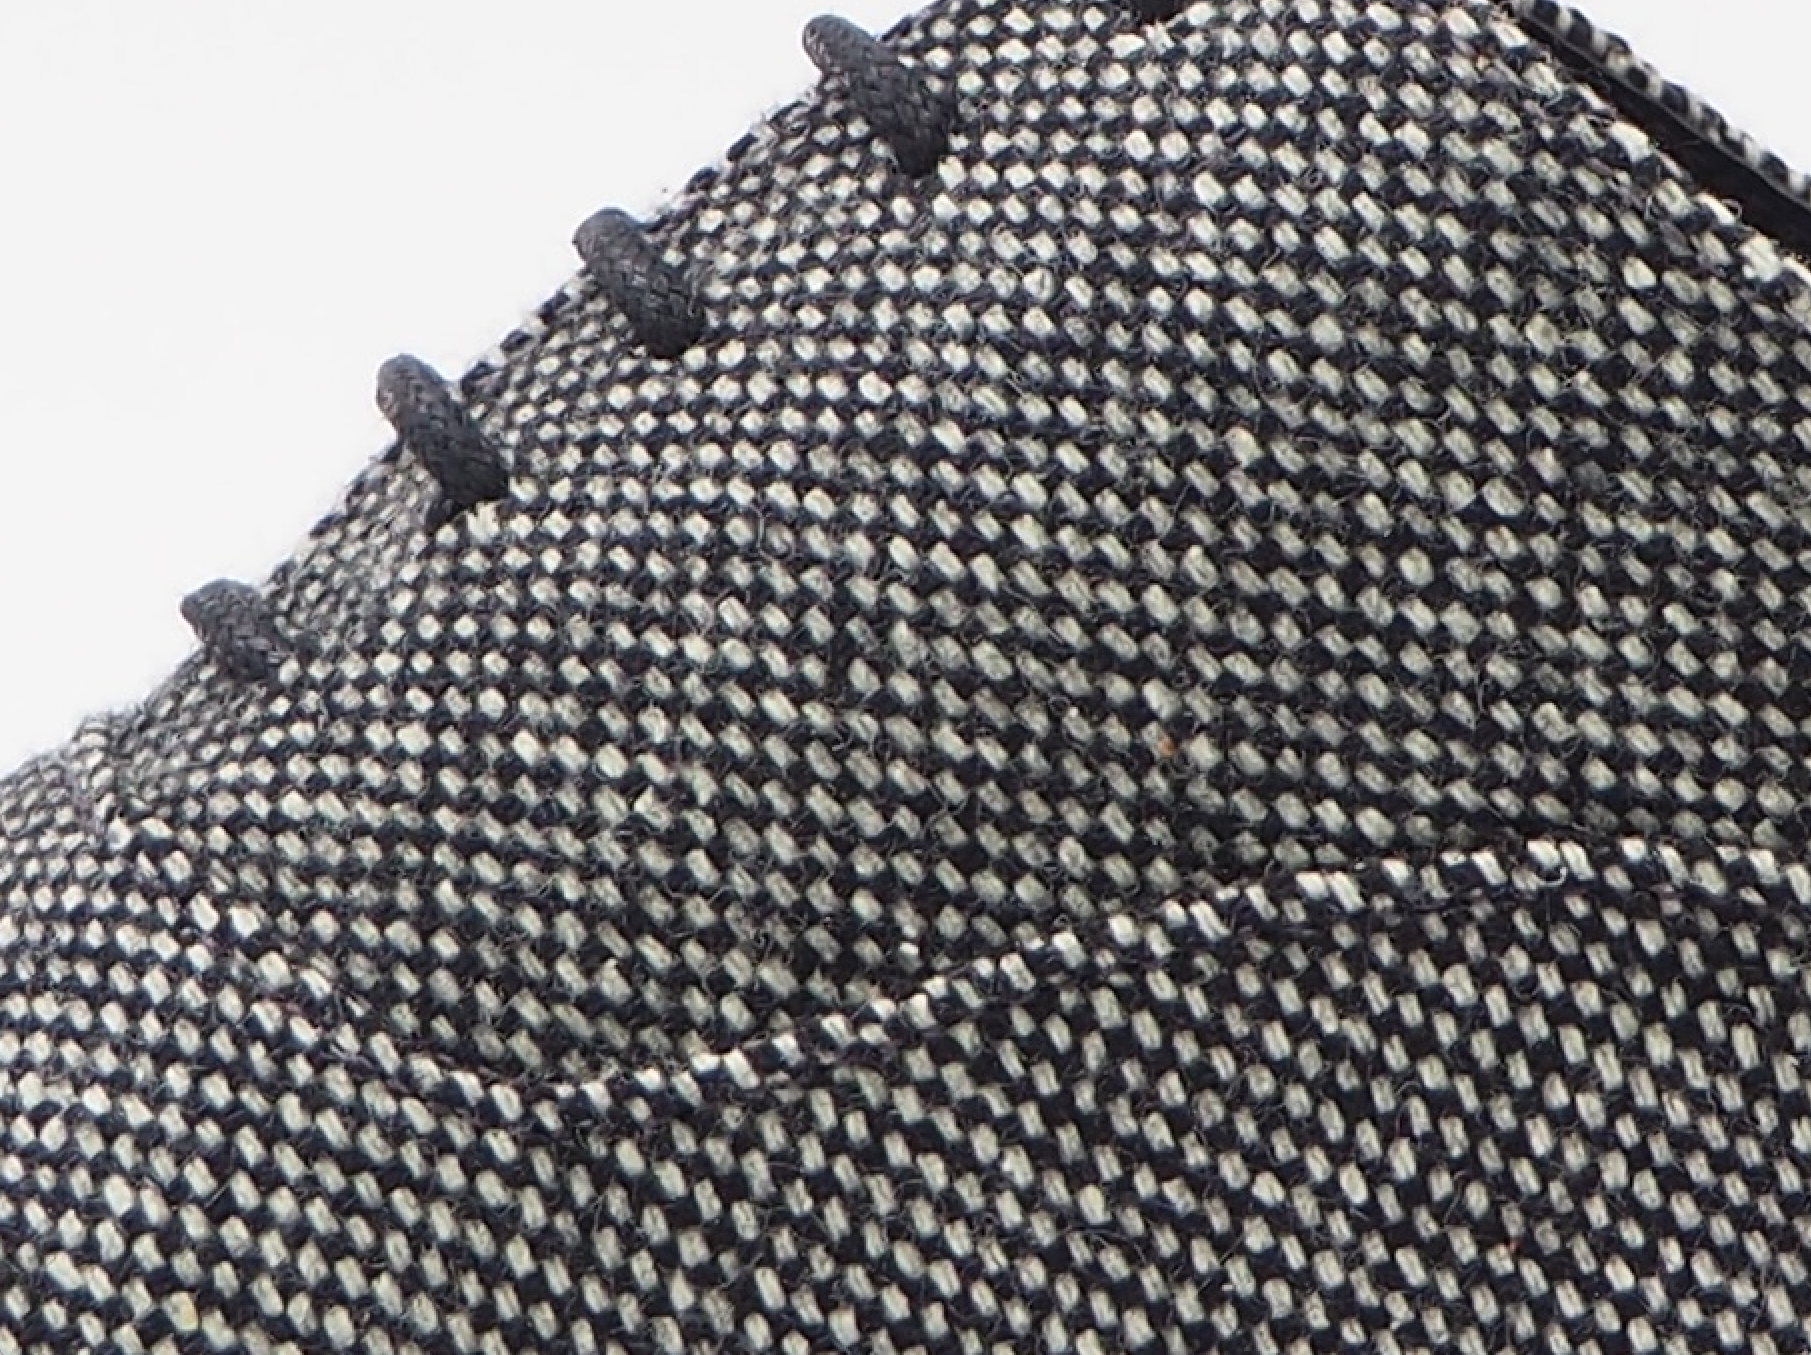 Size 41 - Gray & Black Tweed Oxford + Belt